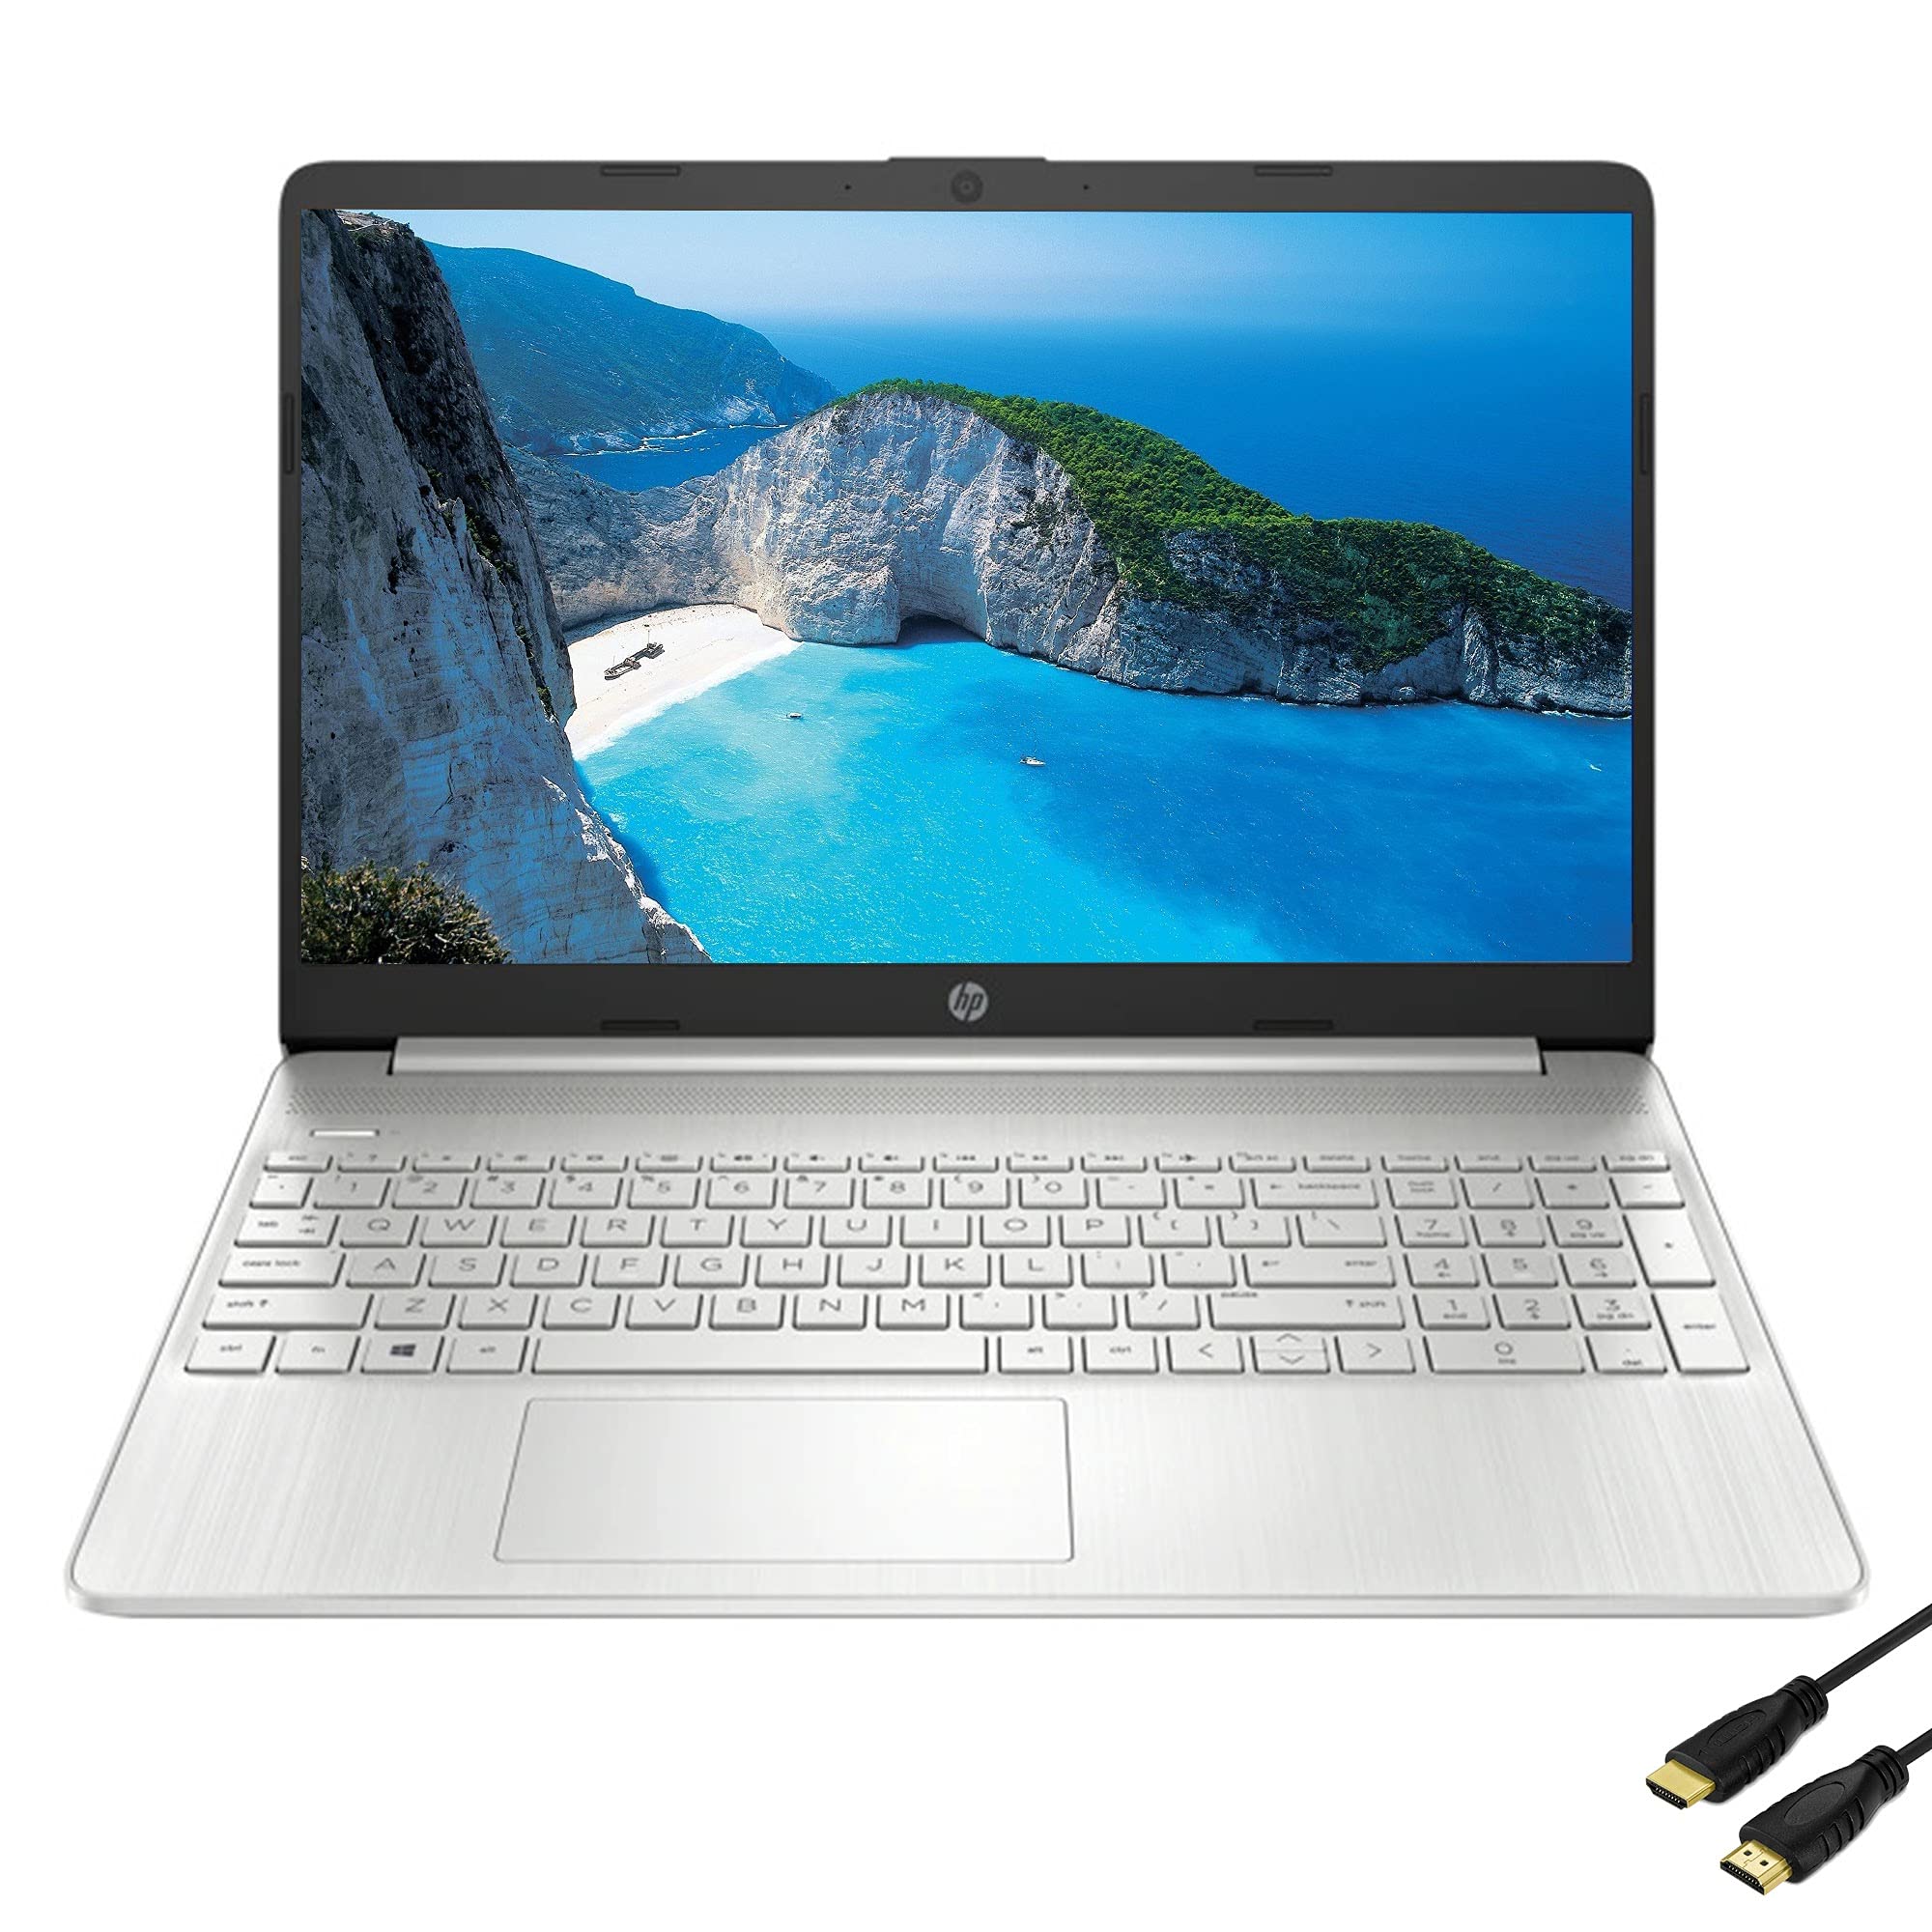 HP 15.6 Inch Full HD Touchscreen Laptop AMD 8-Core Ryzen 7 5700U (Beat i7-10710U), WiFi 6 8GB DDR4 RAM, 512GB PCIE SSD, Windows 10 Home,Silver, 8GB 512GB SSD